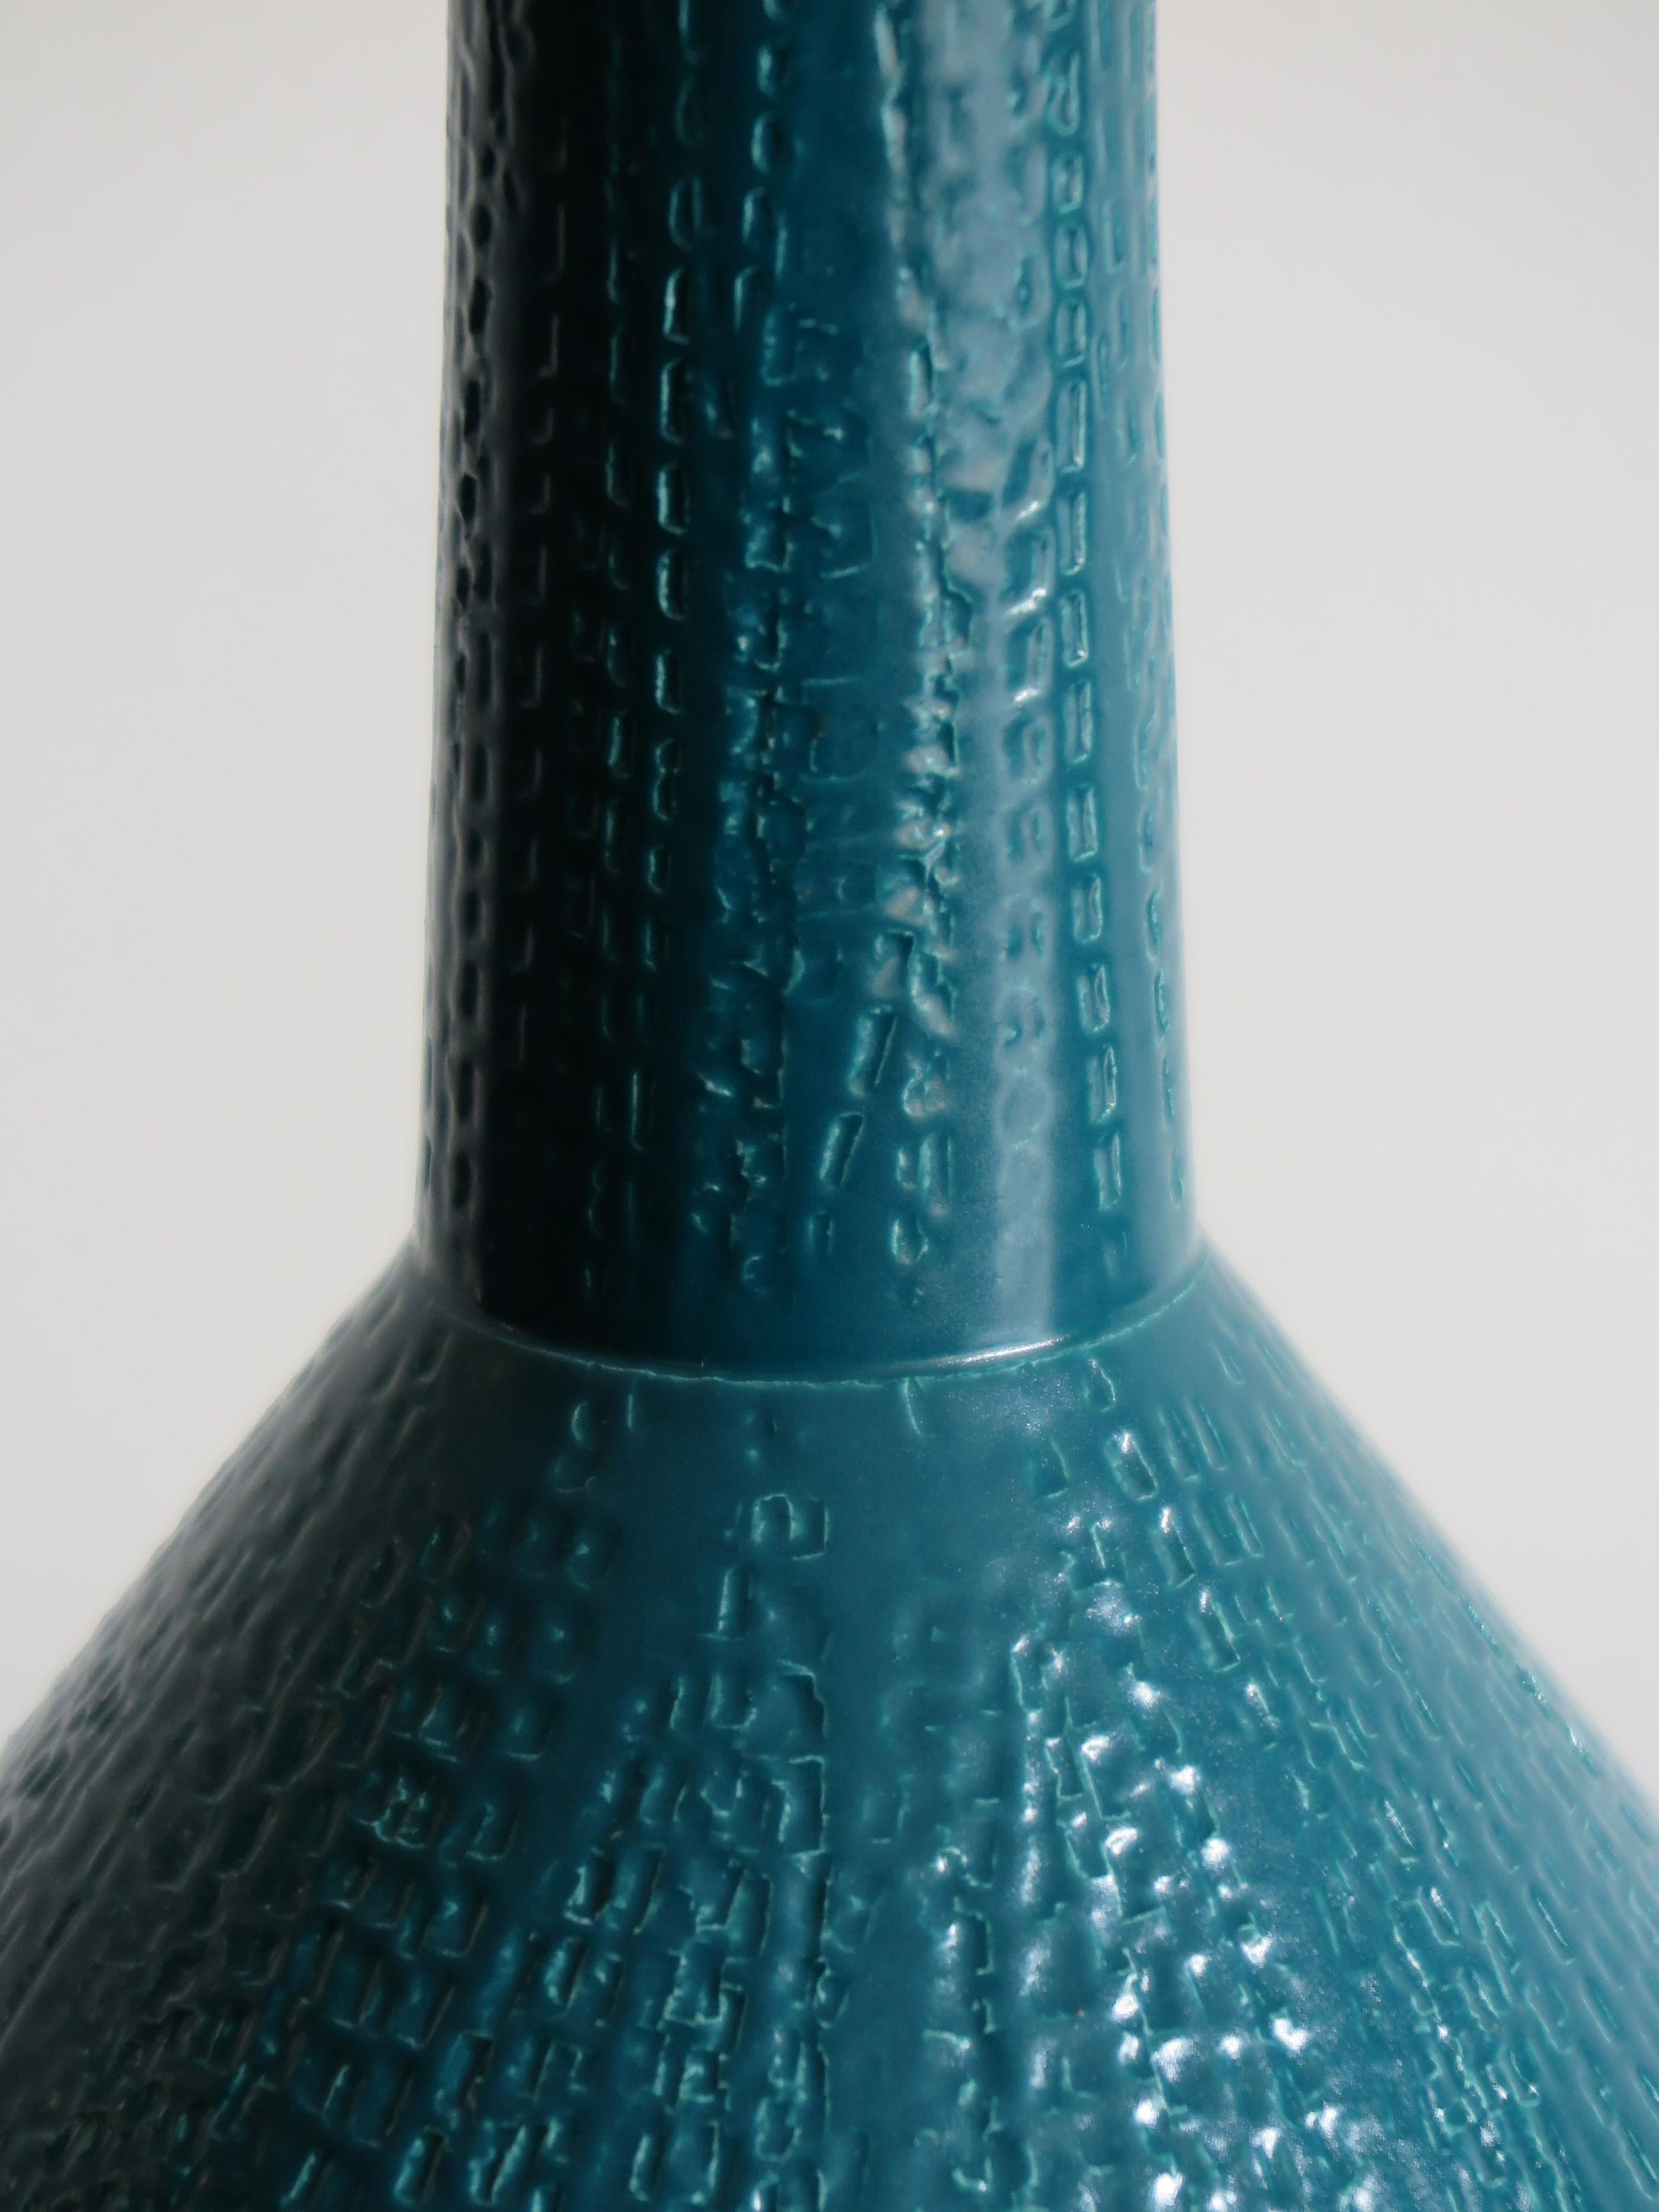 Painted Italian Contemporary Ceramic Green Vase Designed by Capperidicasa